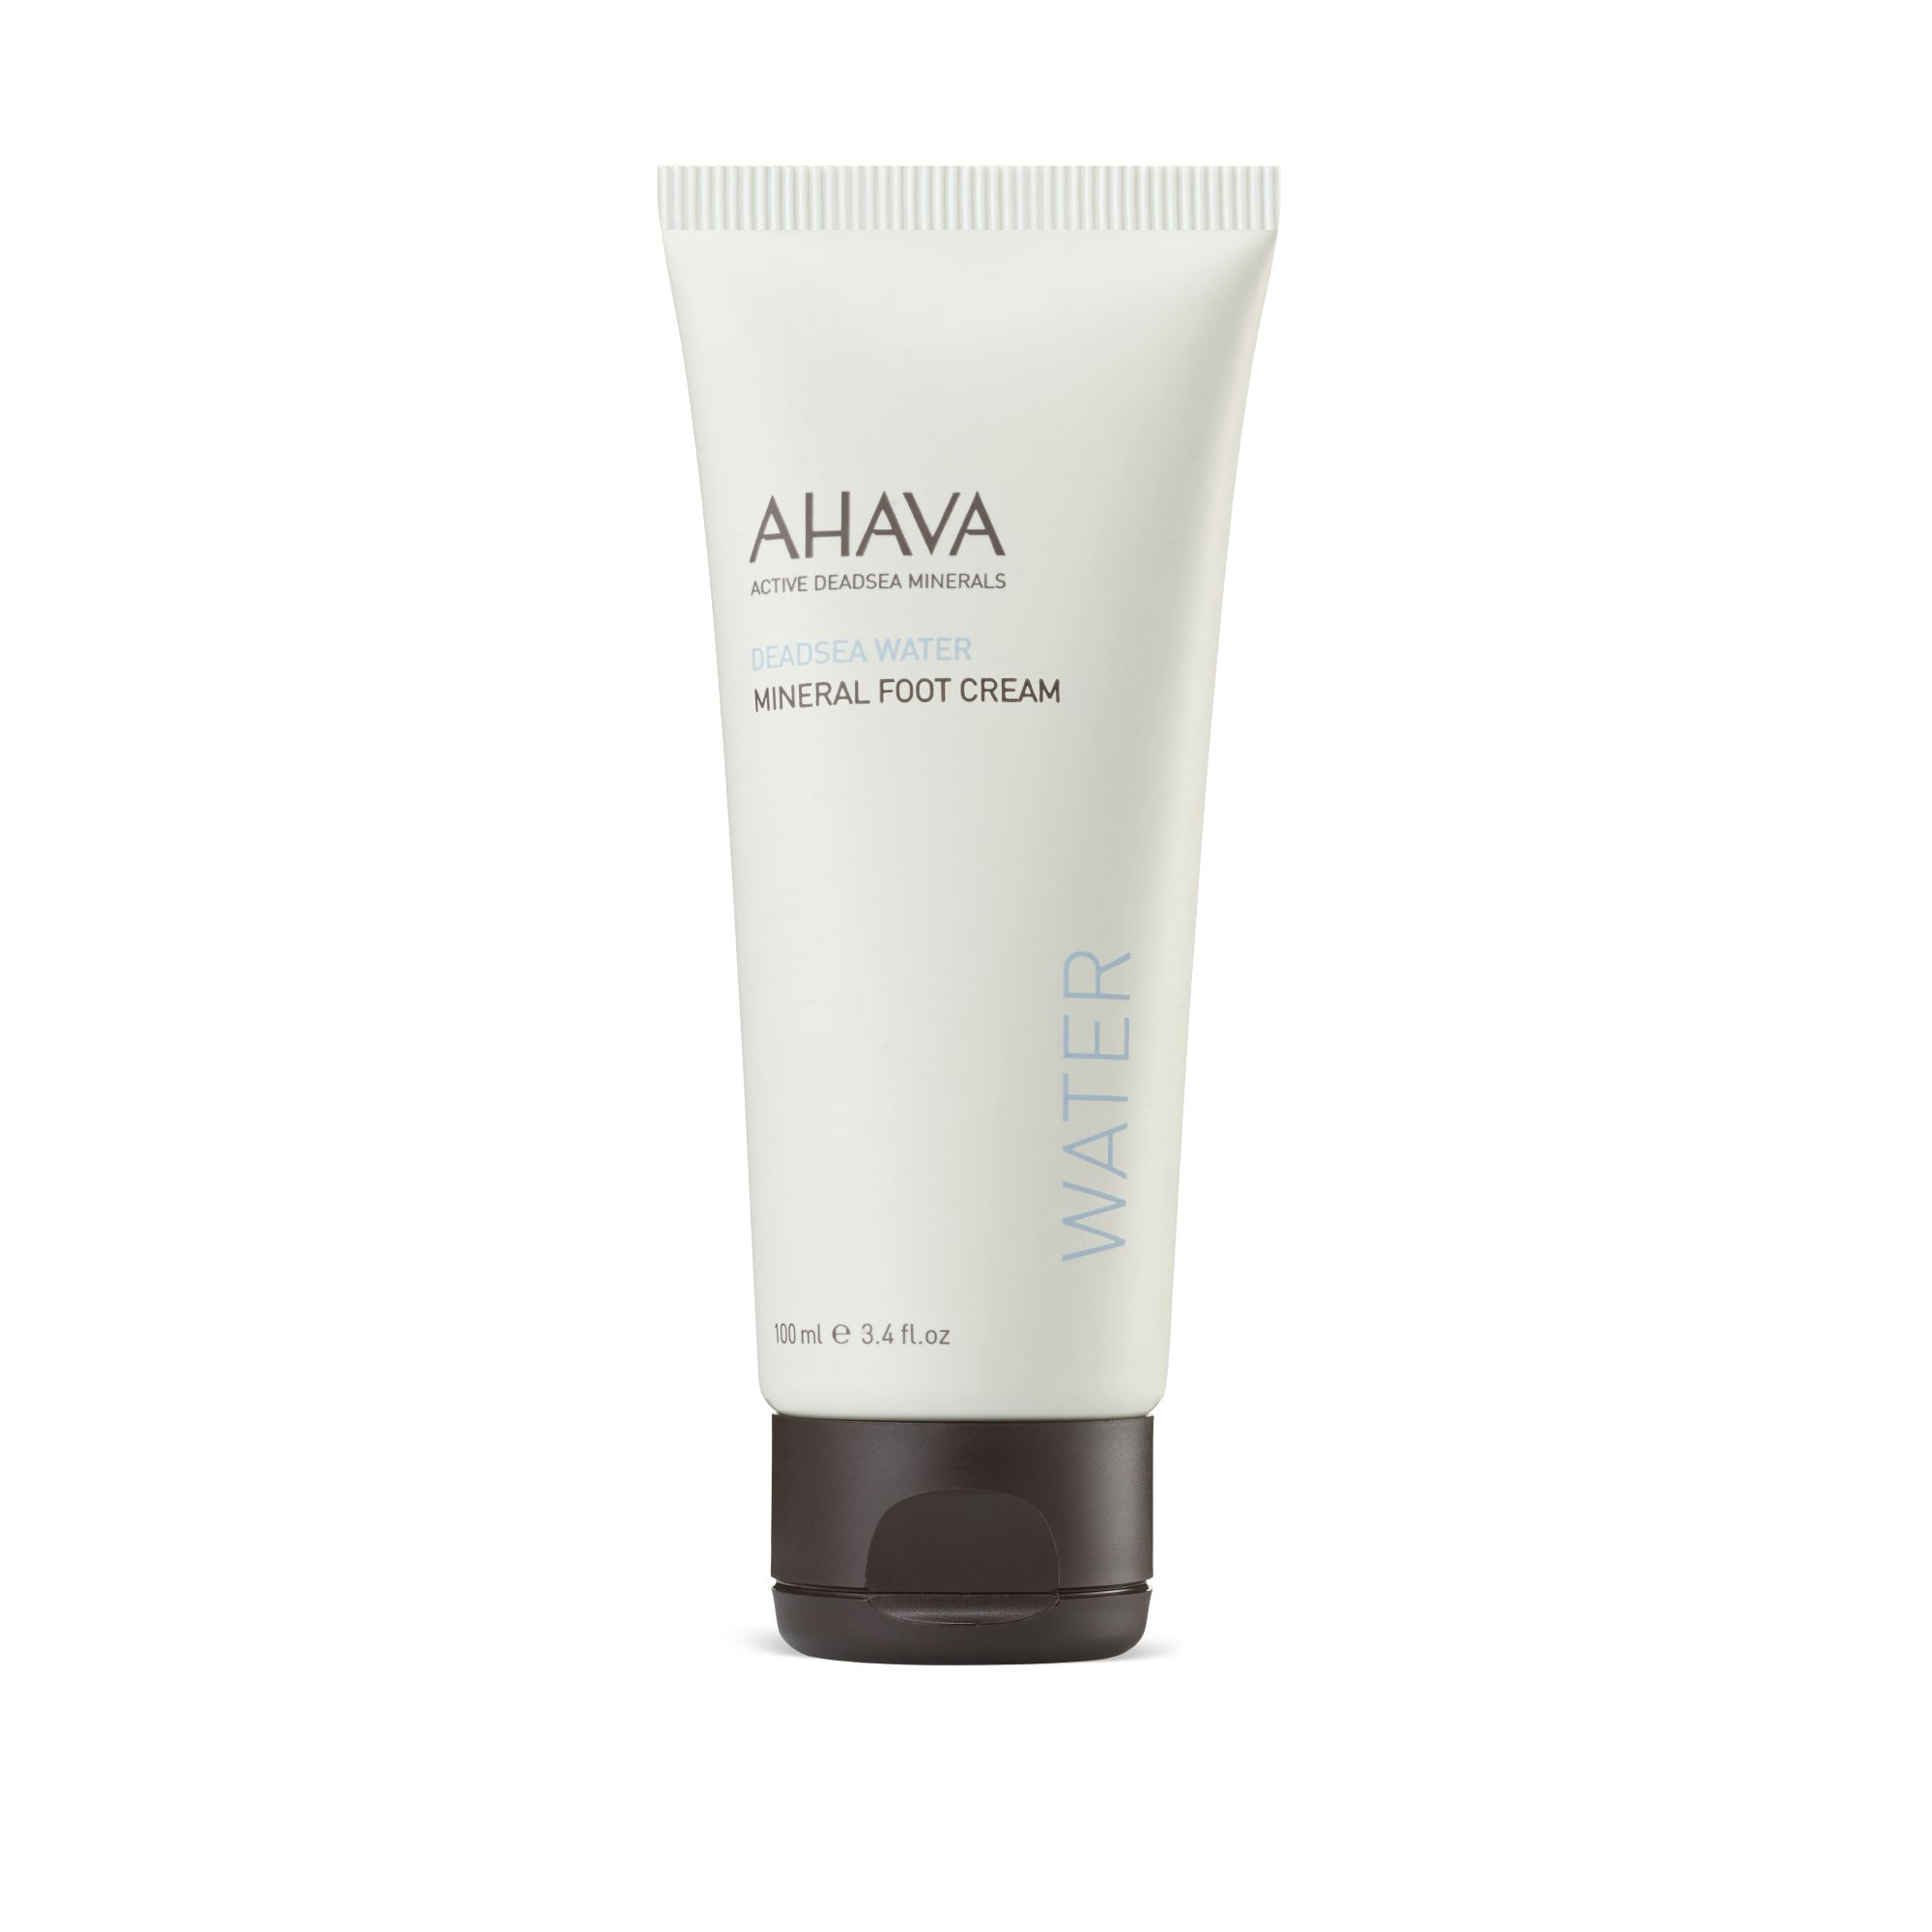 AHAVA DEADSEA WATER Mineral Foot Cream